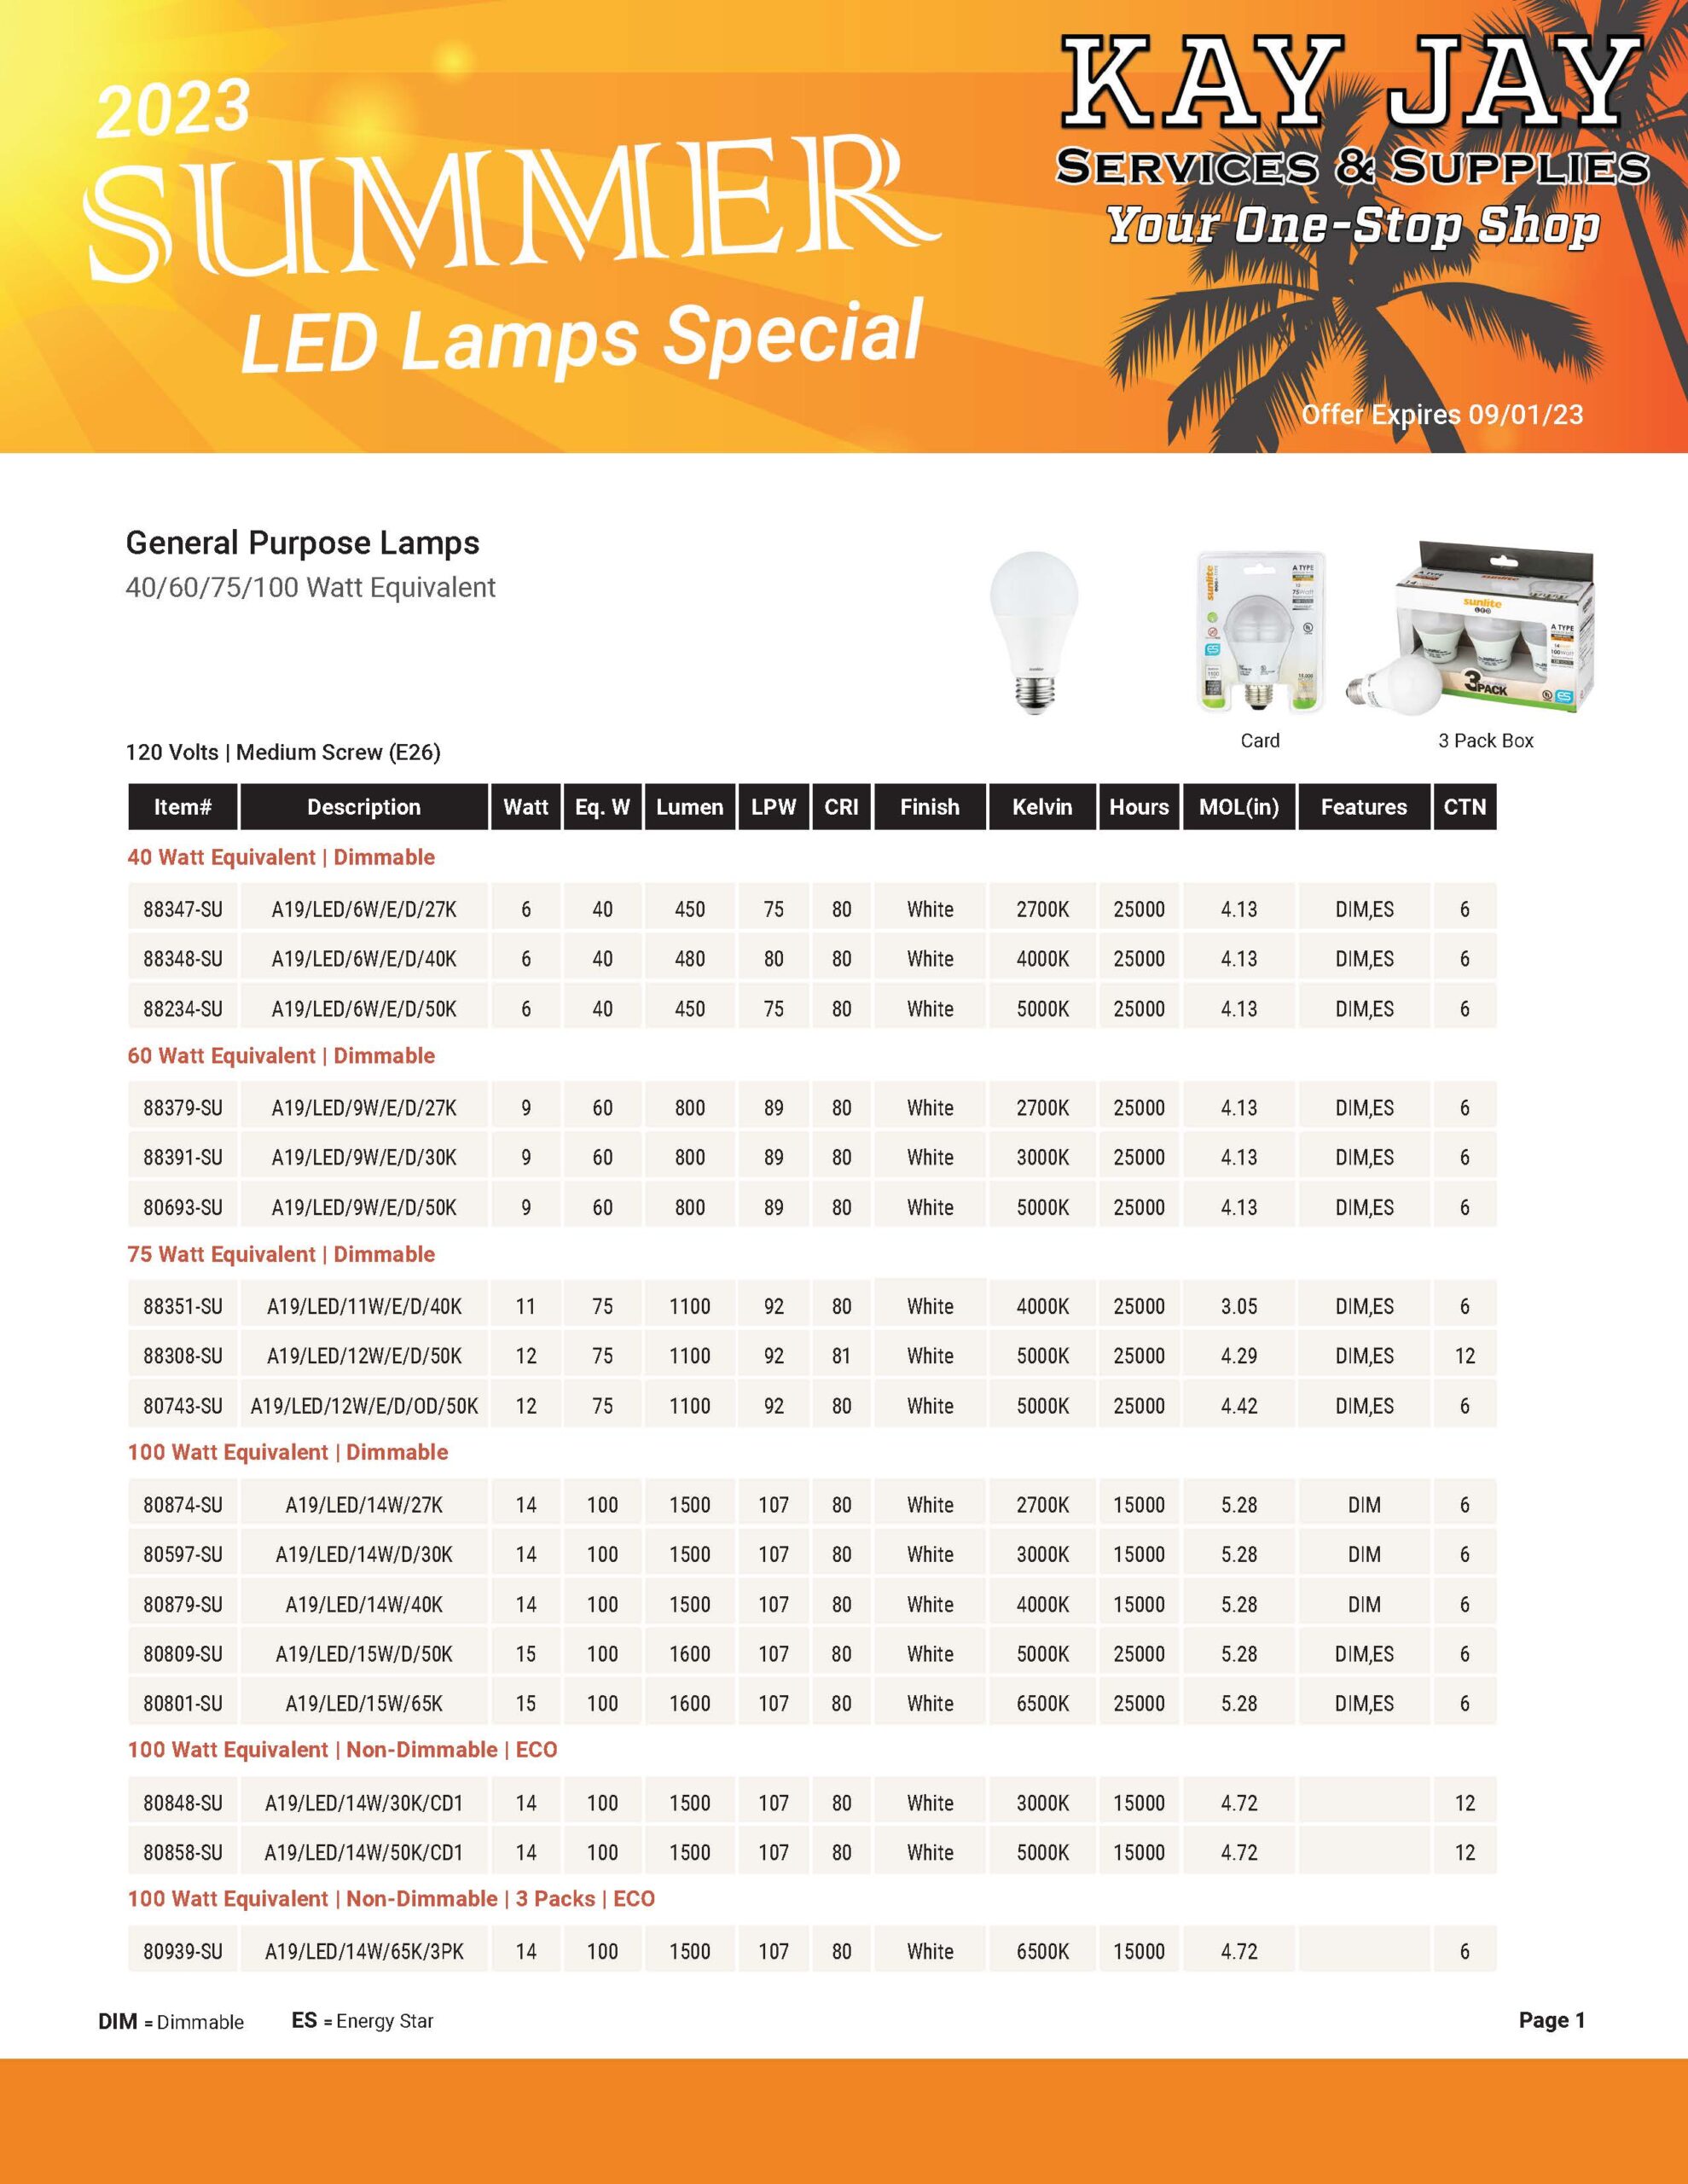 General Purpose Lamps, 40/60/75/100 Watt Equivalent